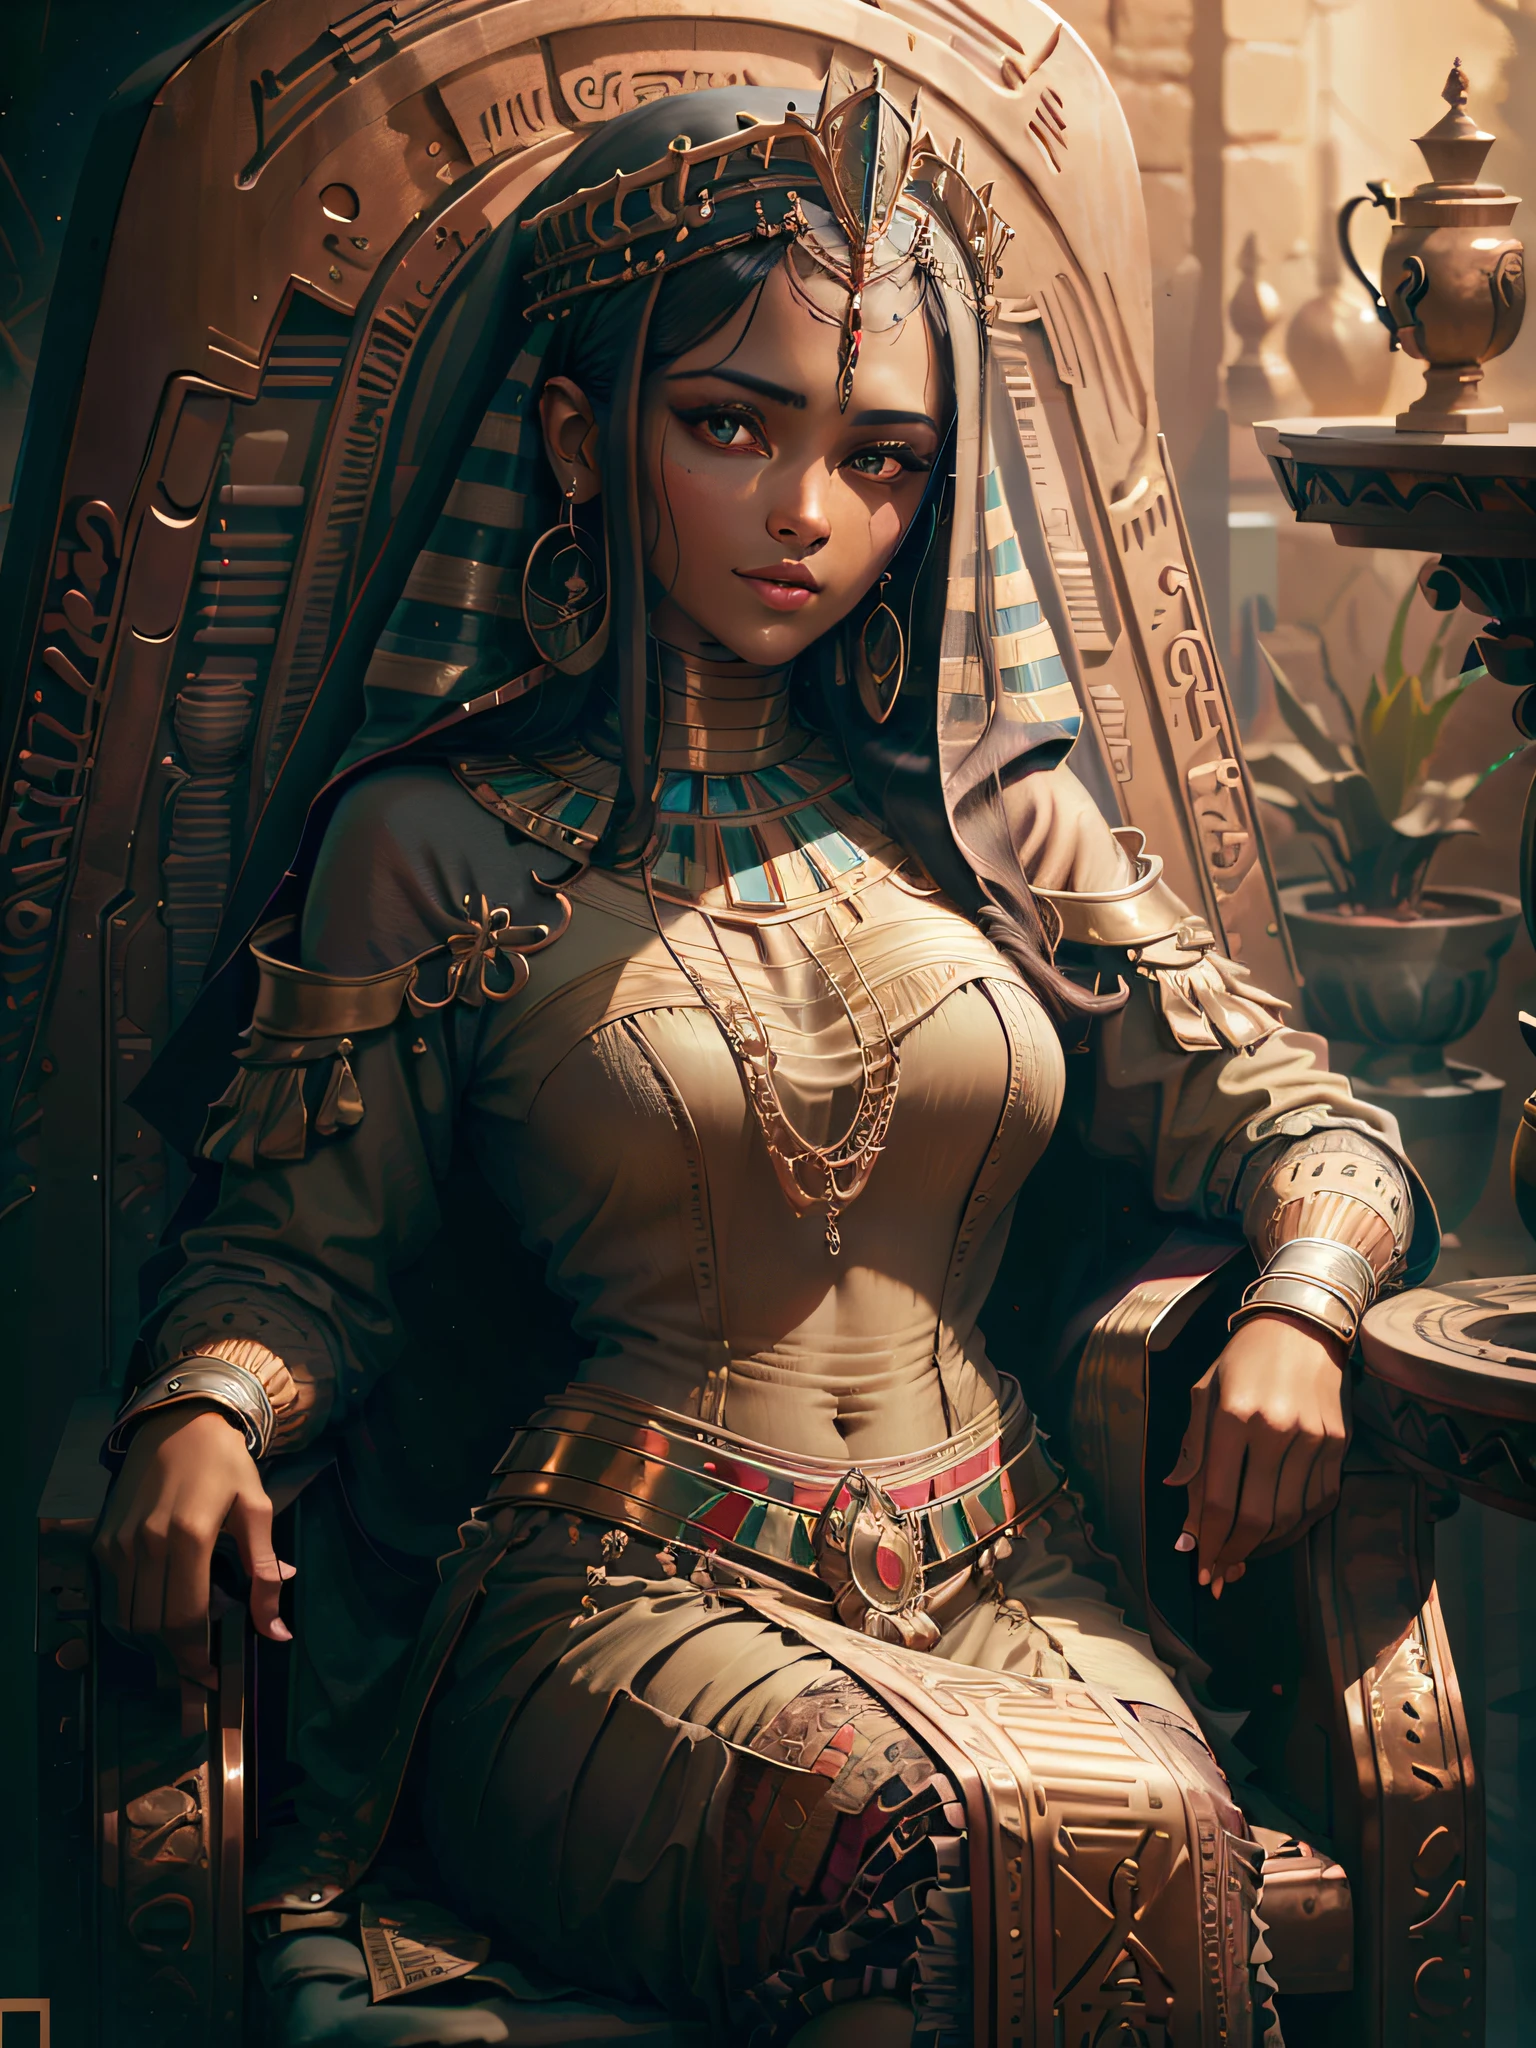 (CG 8k 유닛의 매우 상세한 배경화면), 이집트 여자, 매우 상세한, 완벽한 얼굴, 곱슬곱슬한 검은 머리, 그녀의 왕좌에 앉아있는 고대 이집트의 배경에서,(영화적 설정), 약간의 광채가 나는 어두운 피부, 황혼의 빛 약간 높은 마음, 신비한 모습, 그리고 그녀의 얼굴에는 약간의 미소가, (매우 상세한 eyes).